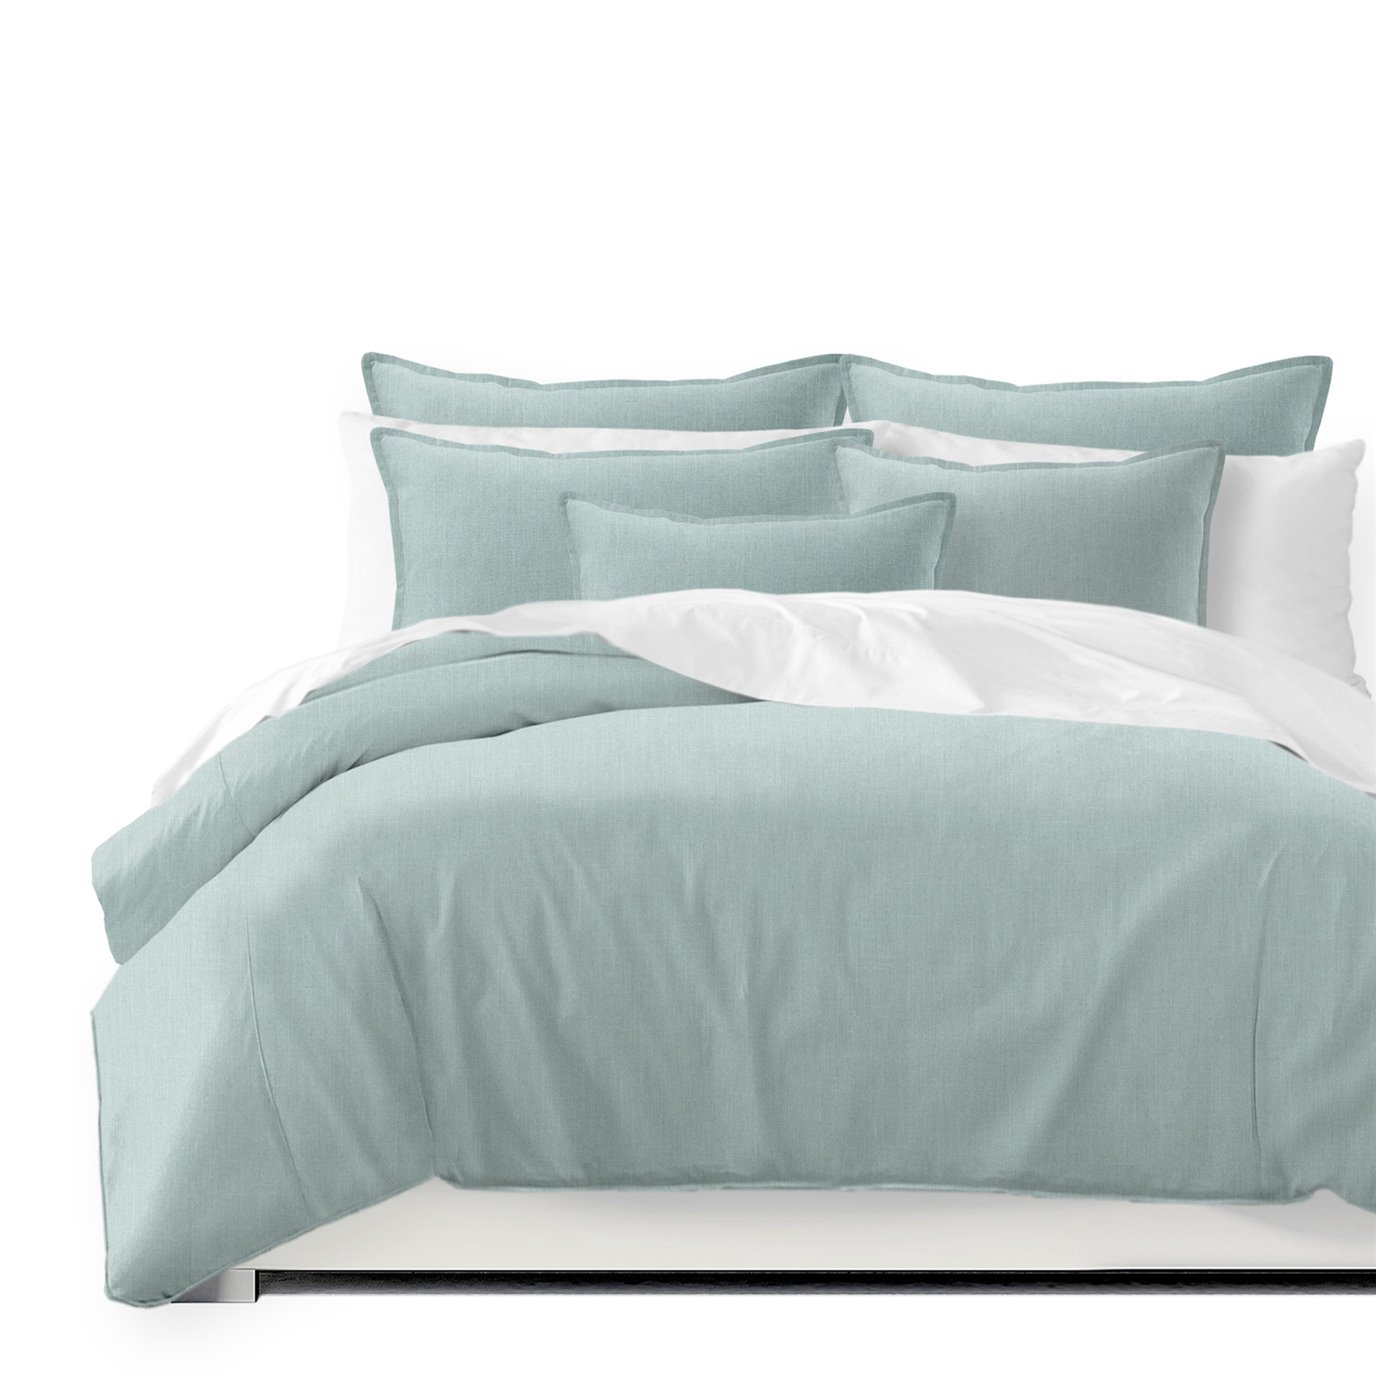 Sutton Aqua Mist Comforter and Pillow Sham(s) Set - Size Twin